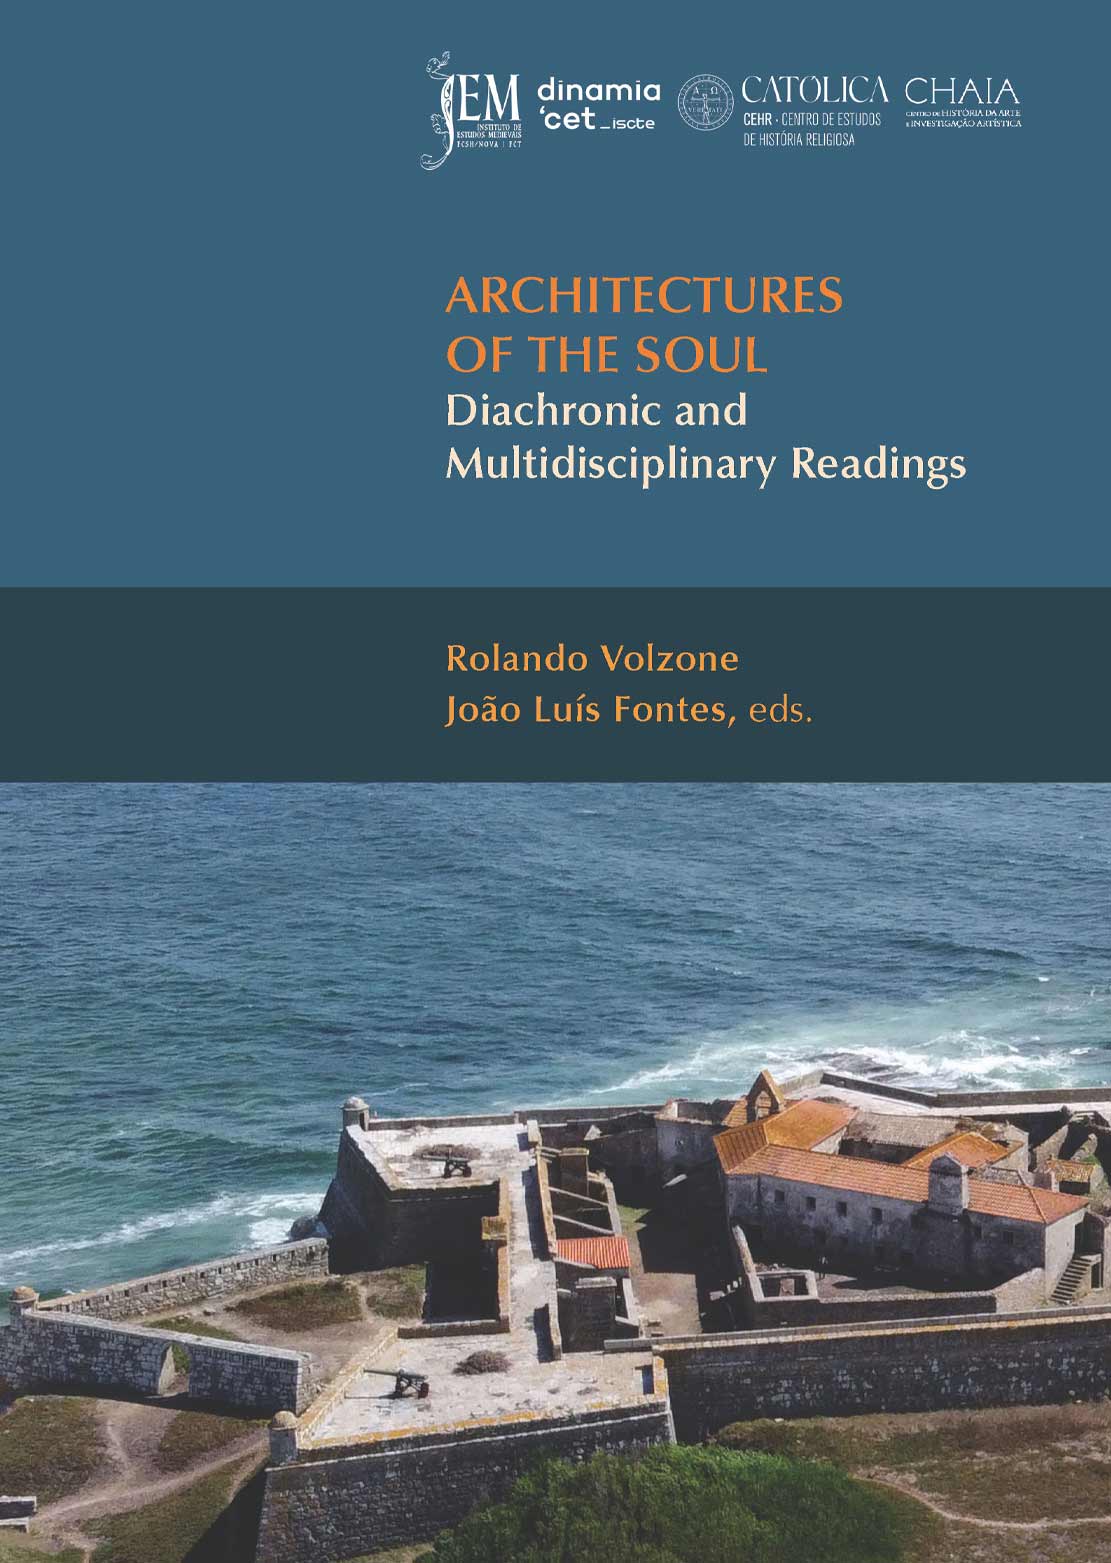 Capa da publicação Architectures of the soul. Diacronic and multidisciplinary readings